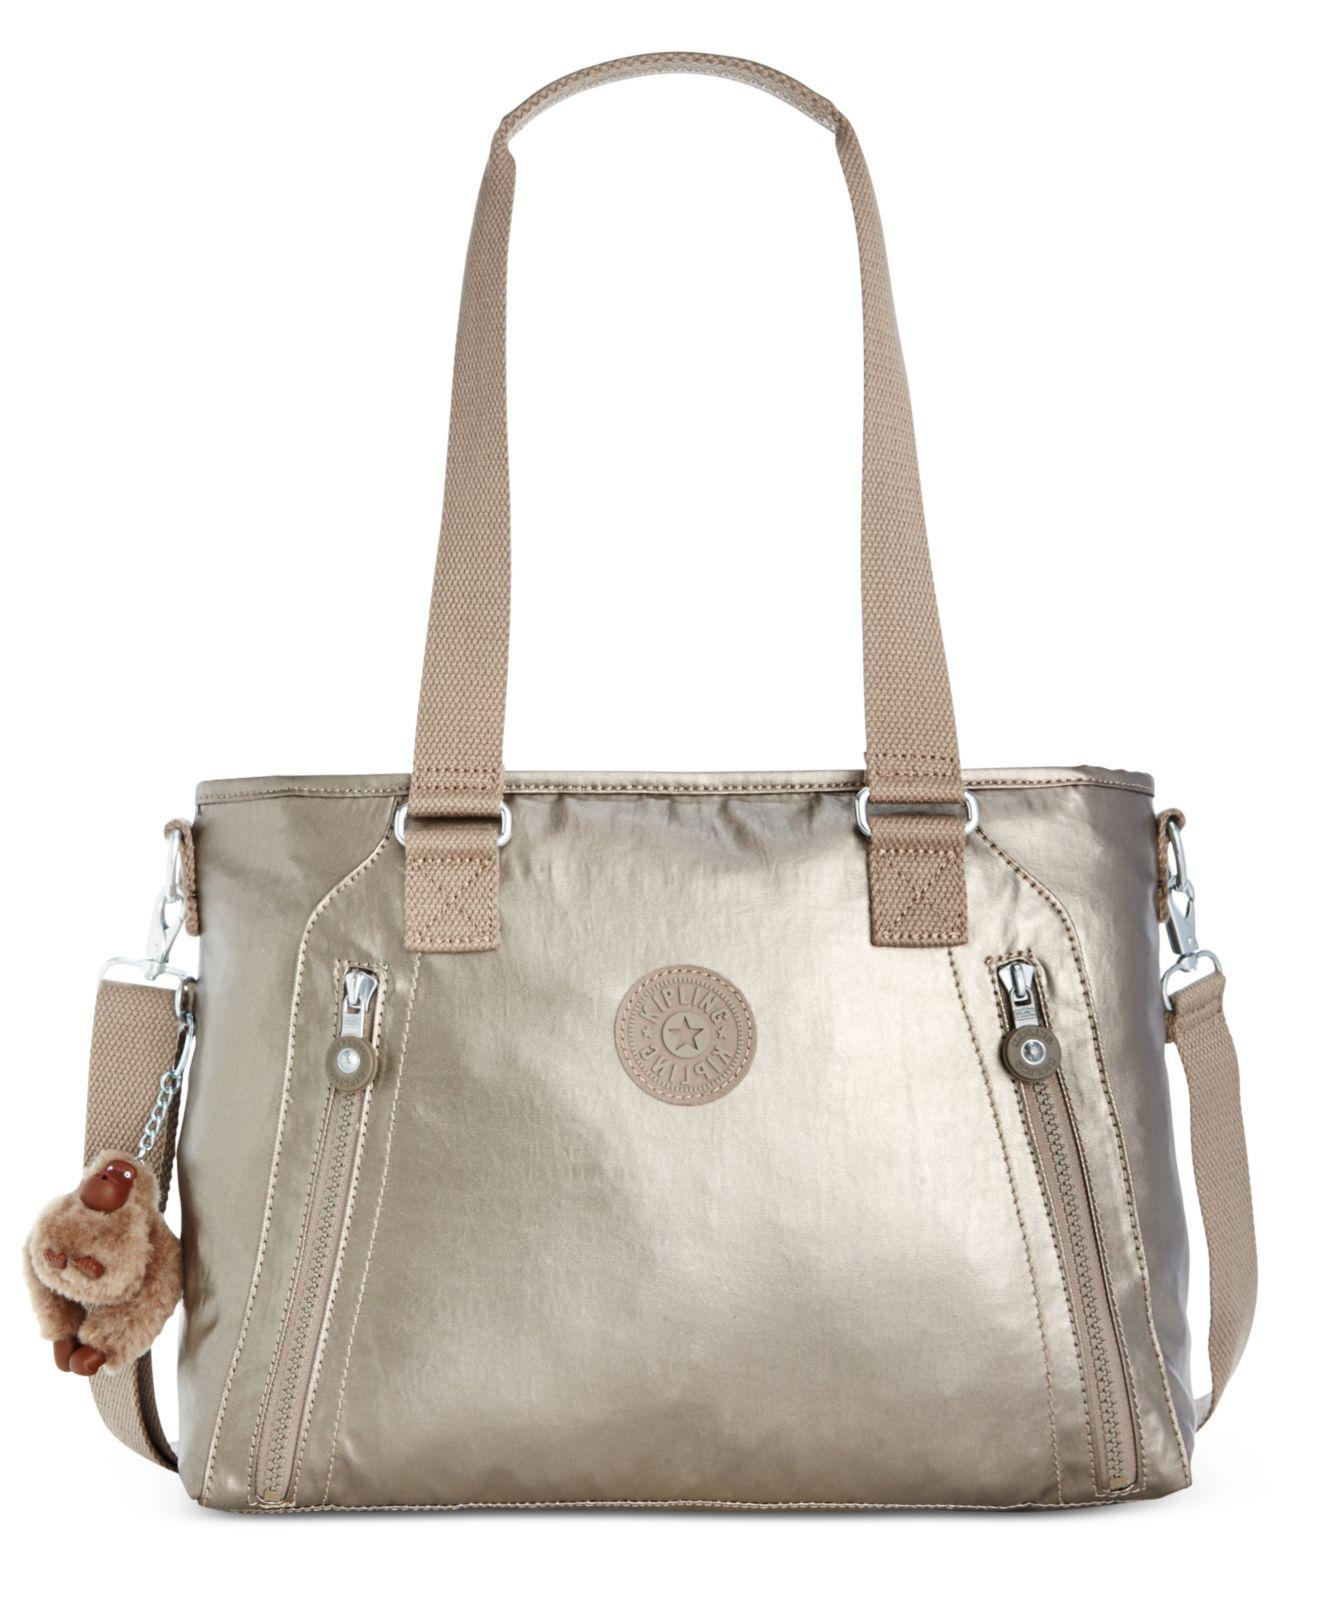 Kipling Synthetic Angela Shoulder Bag in Metallic Pewter/Silver ...